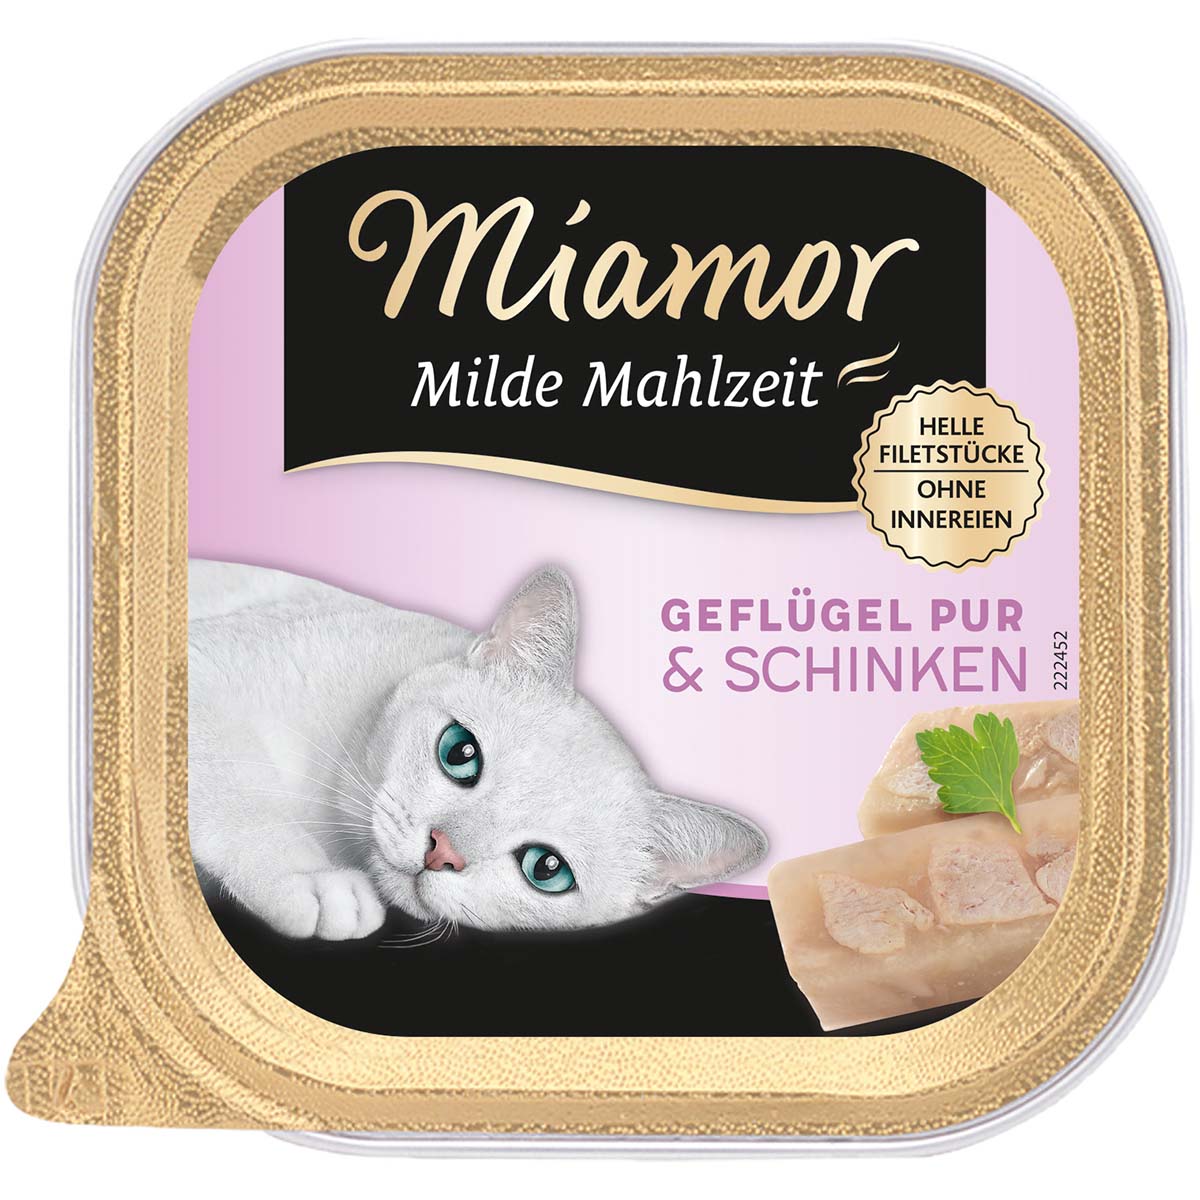 Miamor Milde Mahlzeit Geflügel Pur & Schinken 16x100g